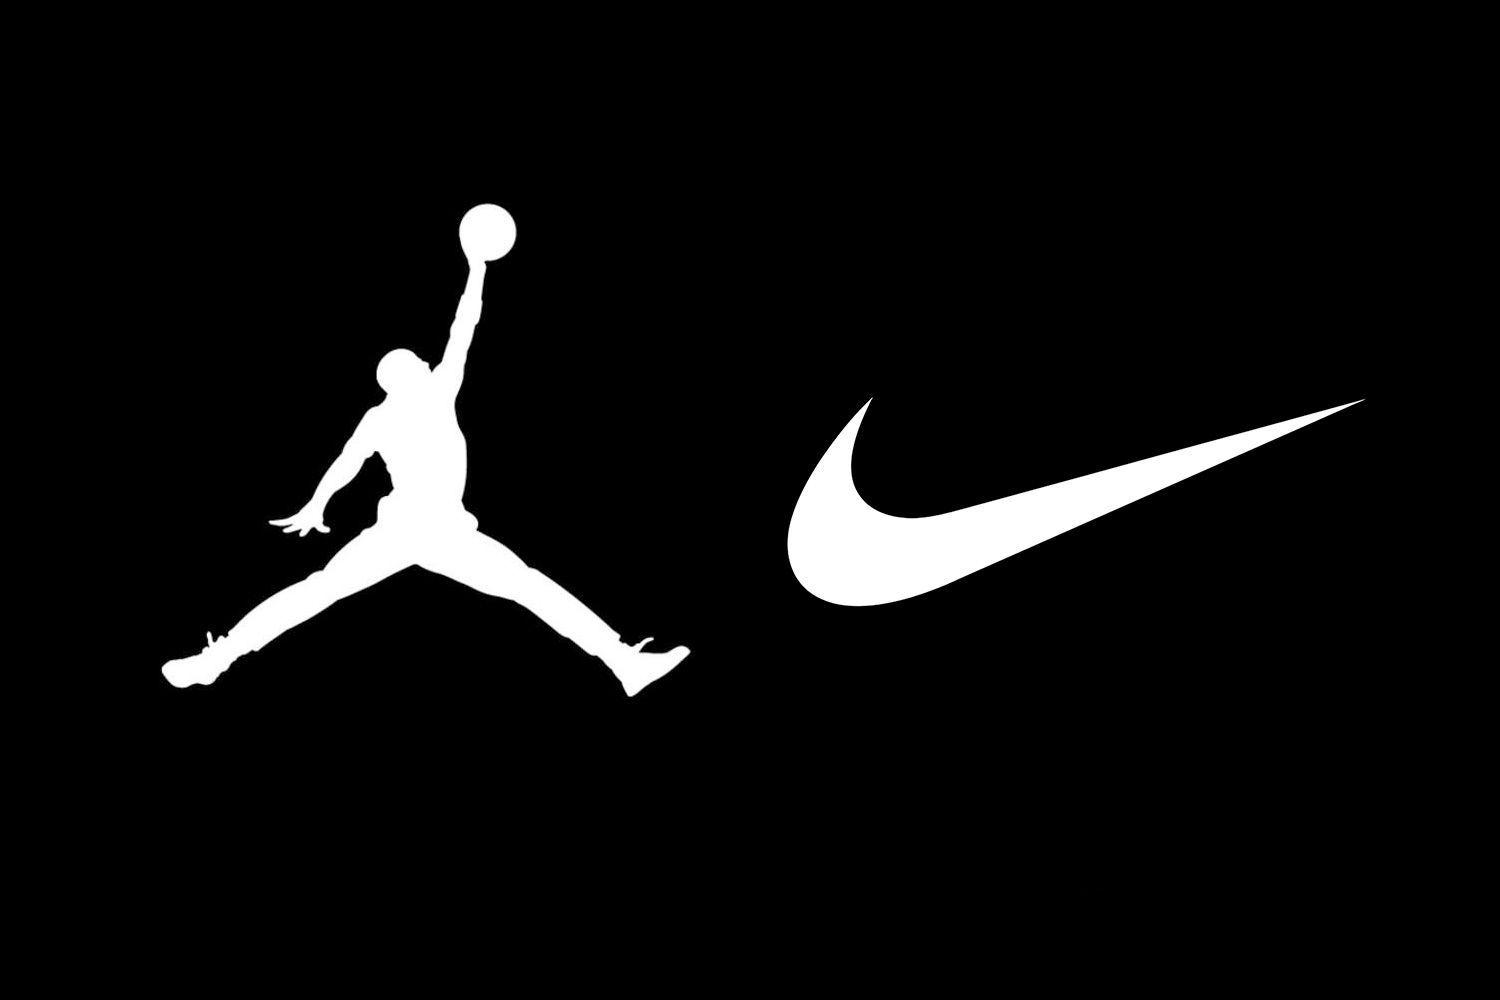 Michael Jordan Swoosh Logo - Nike Wants to Add the Swoosh and Jumpman Logos to NBA Apparel | Dope ...